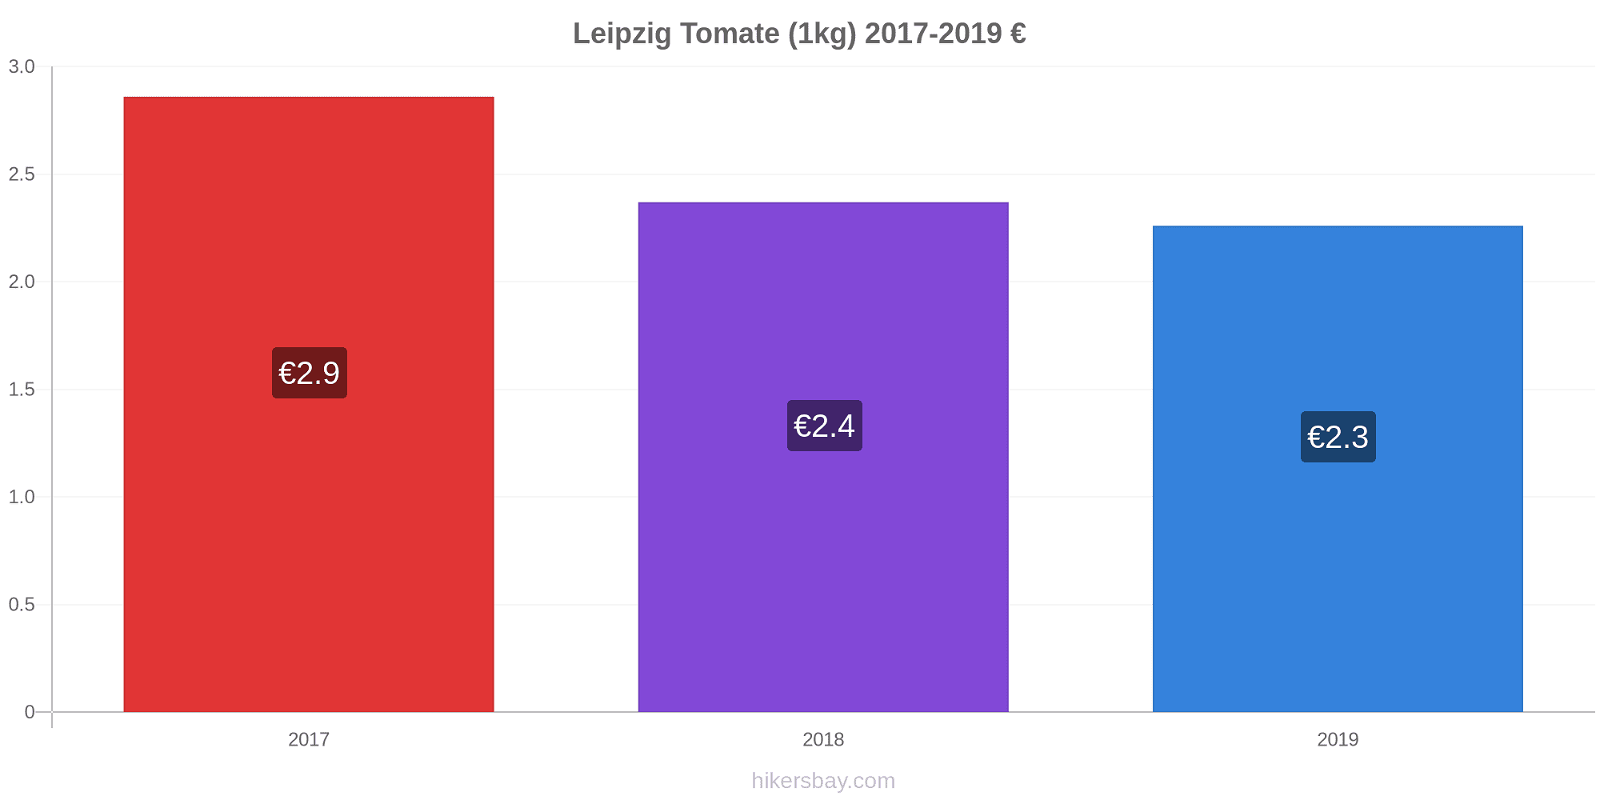 Leipzig modificări de preț Tomate (1kg) hikersbay.com